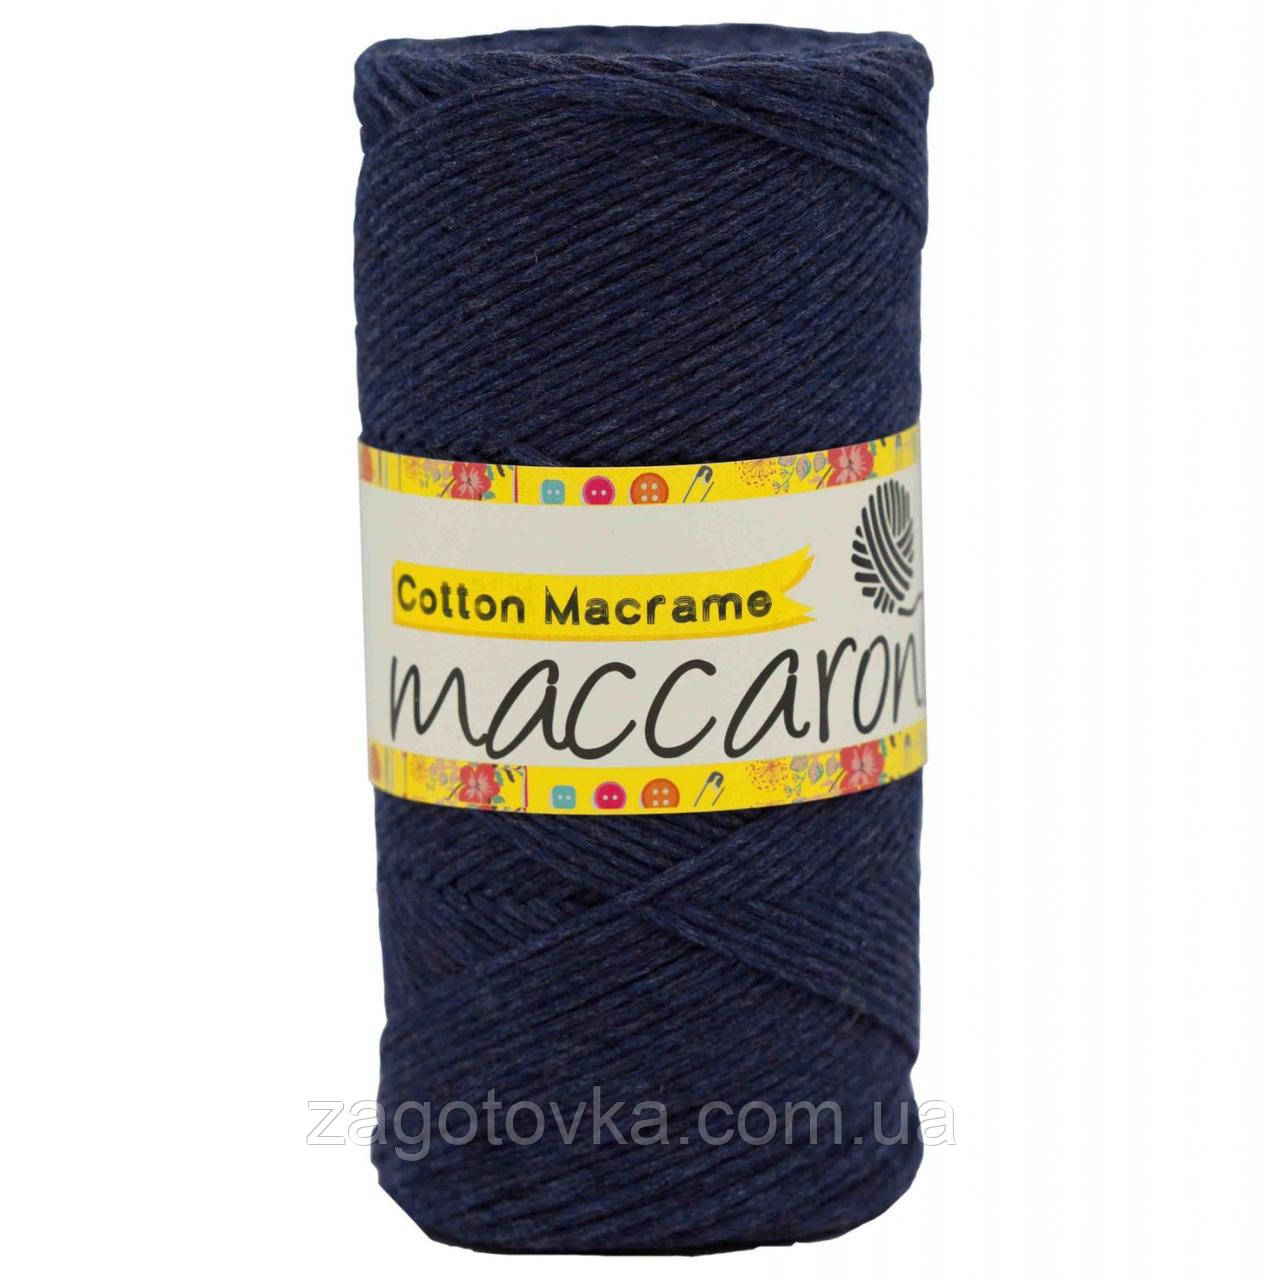 Эко шнур хлопковый Cotton Macrame Maccaroni 2,5 мм, Темно-синий